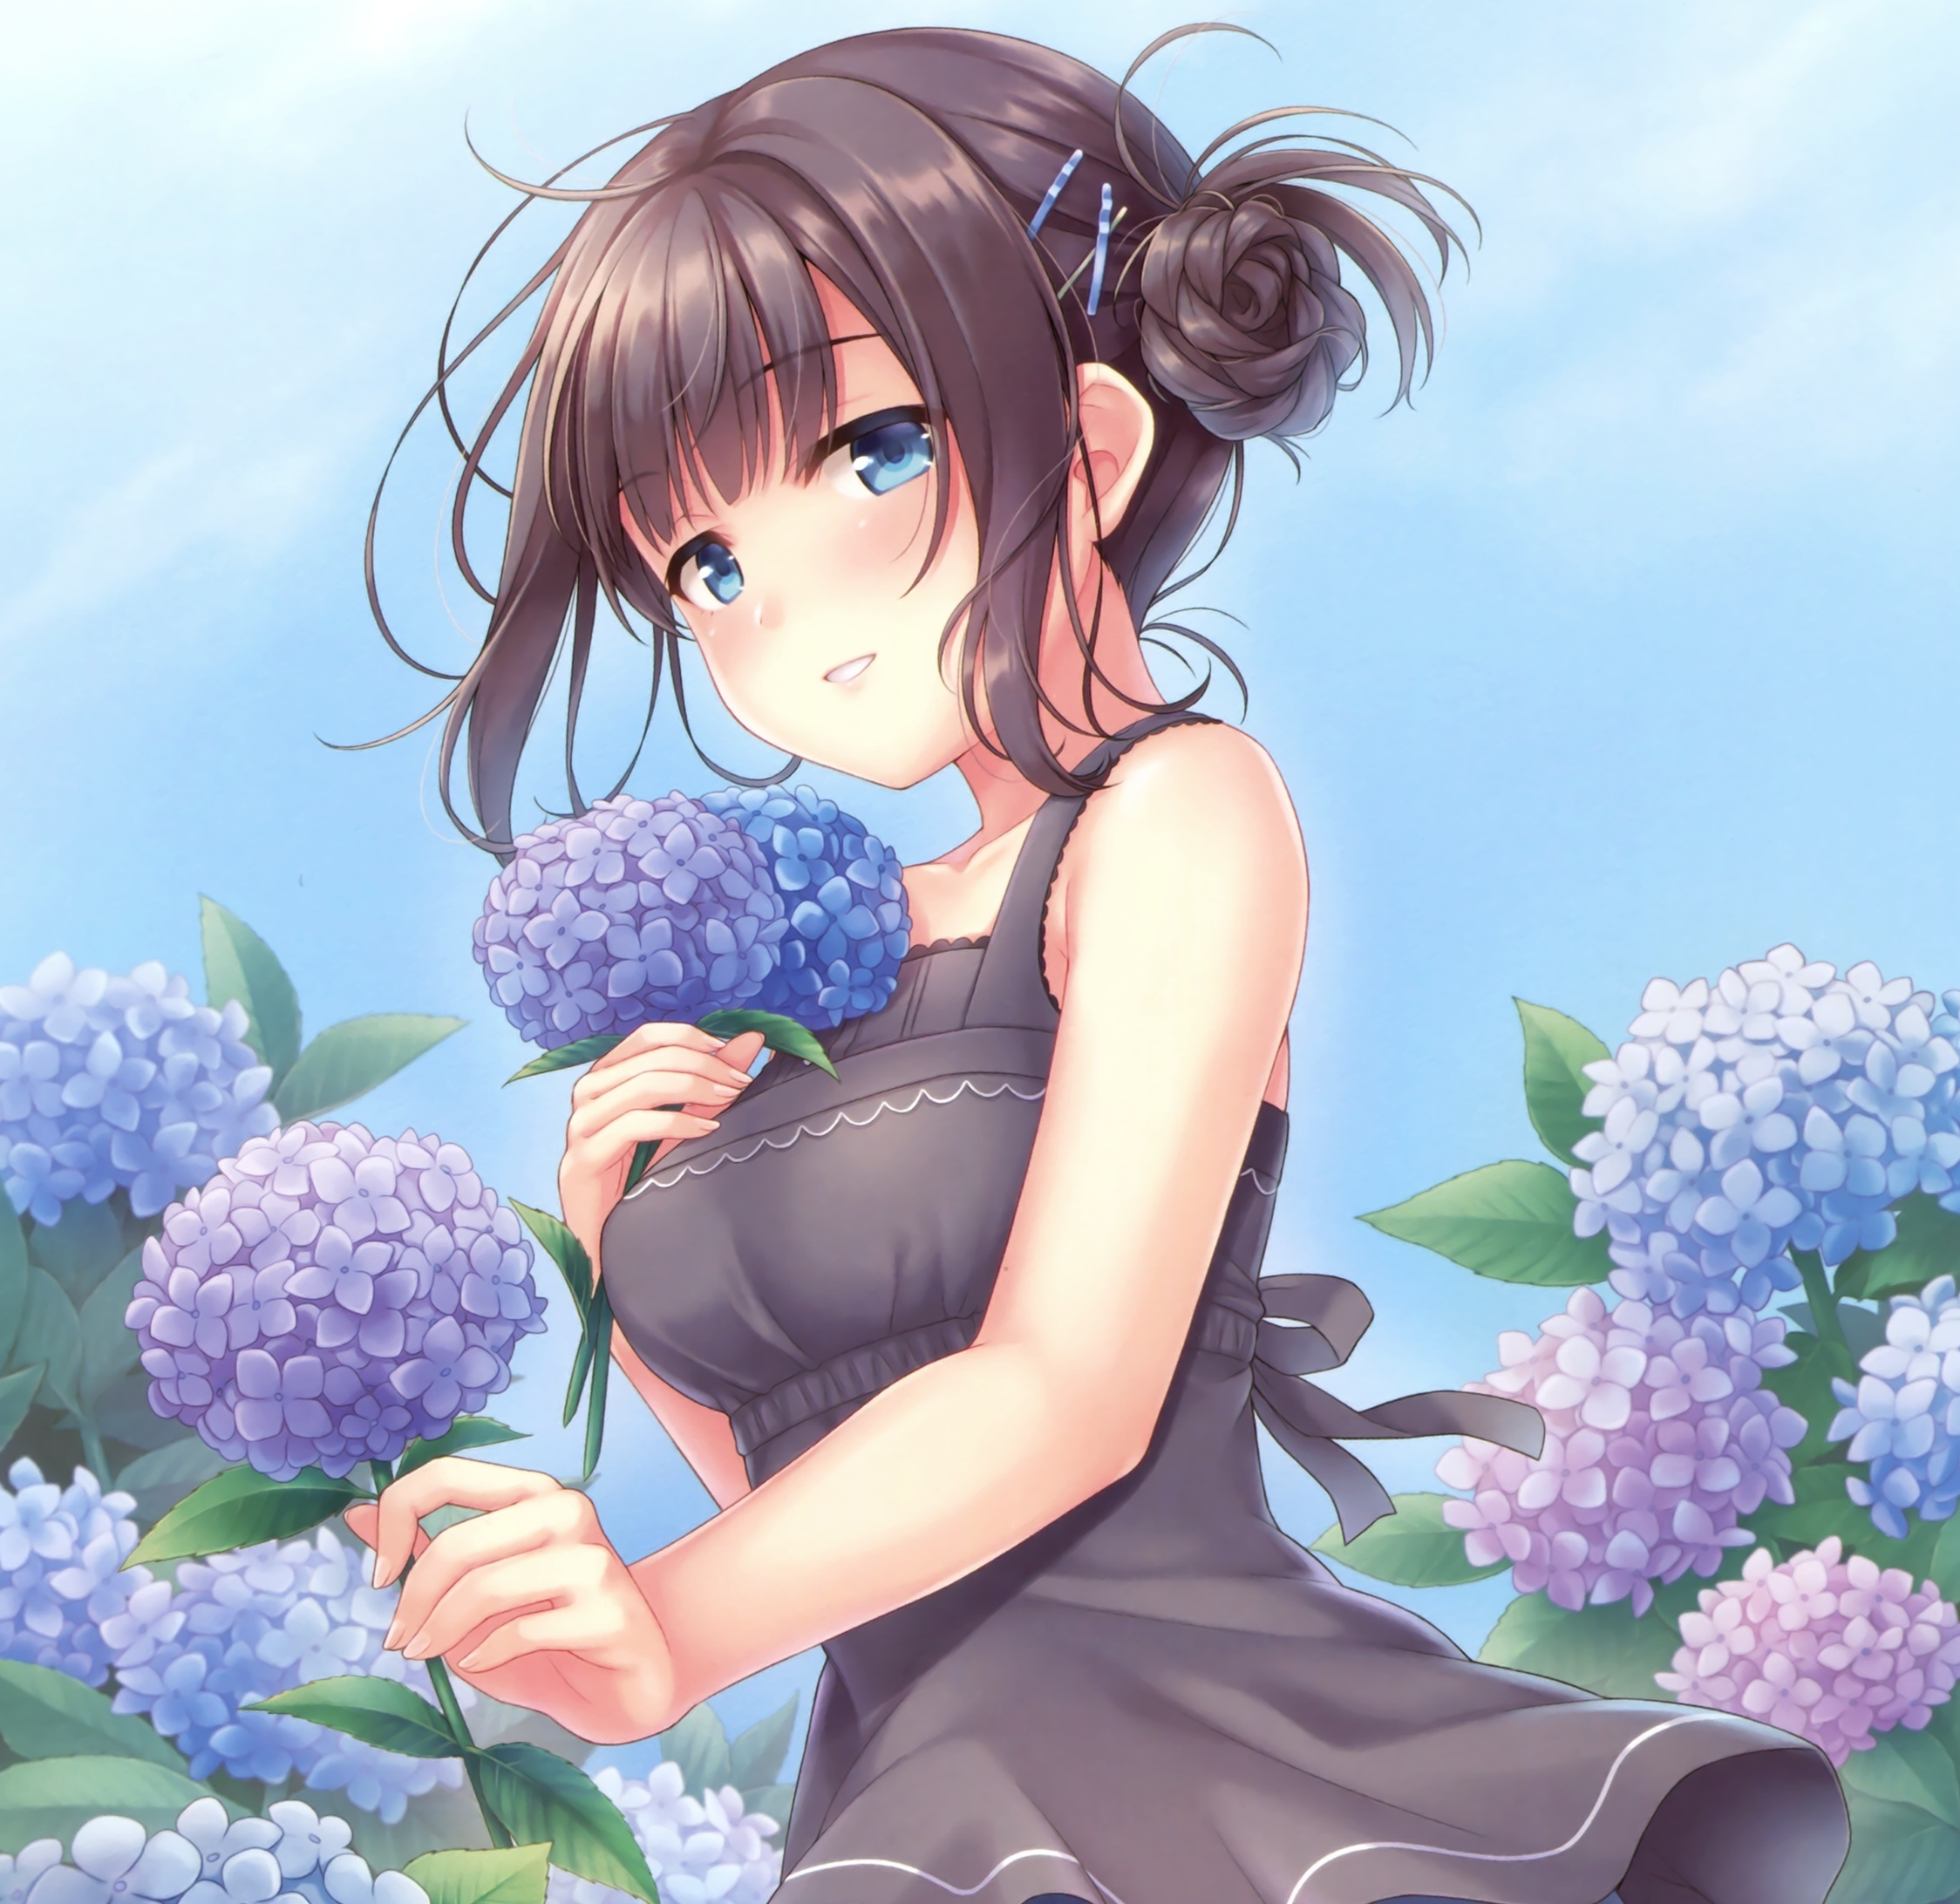 Download wallpaper 2248x2248 flowers, blue, cute anime girl, ipad ...